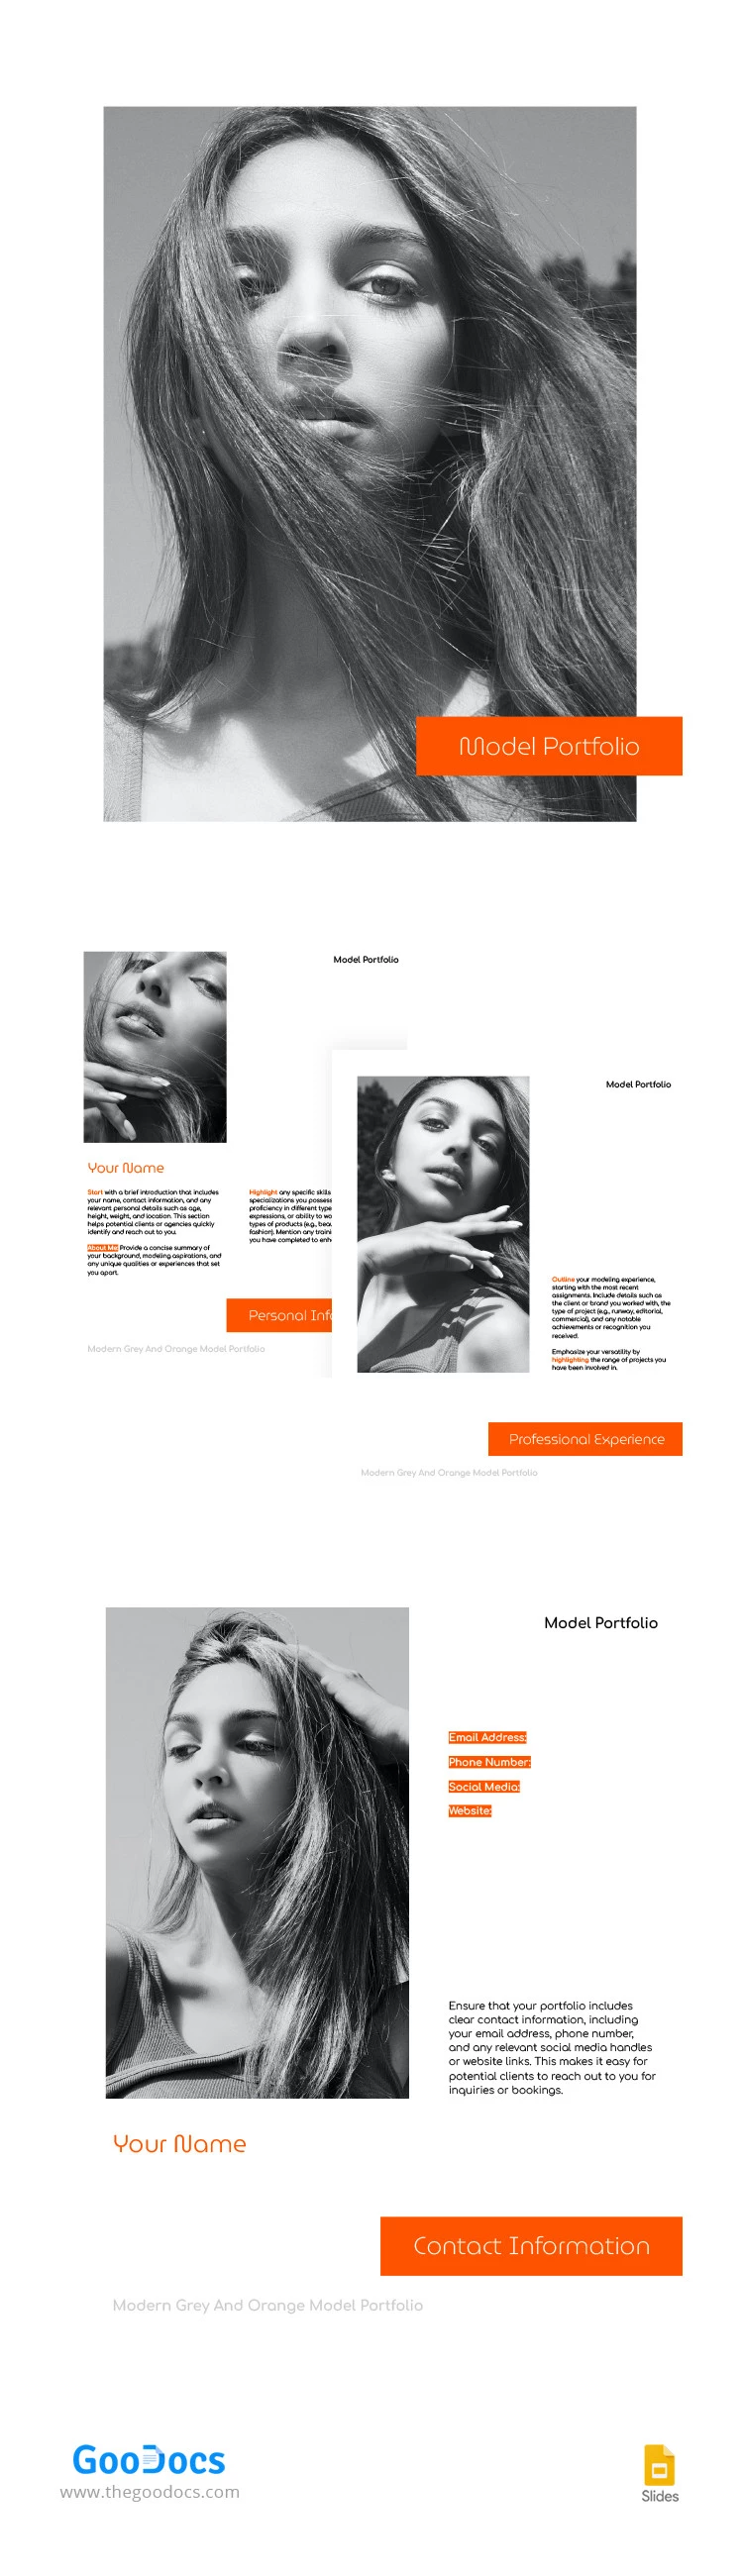 Portafolio de modelos moderno en gris y naranja. - free Google Docs Template - 10066458